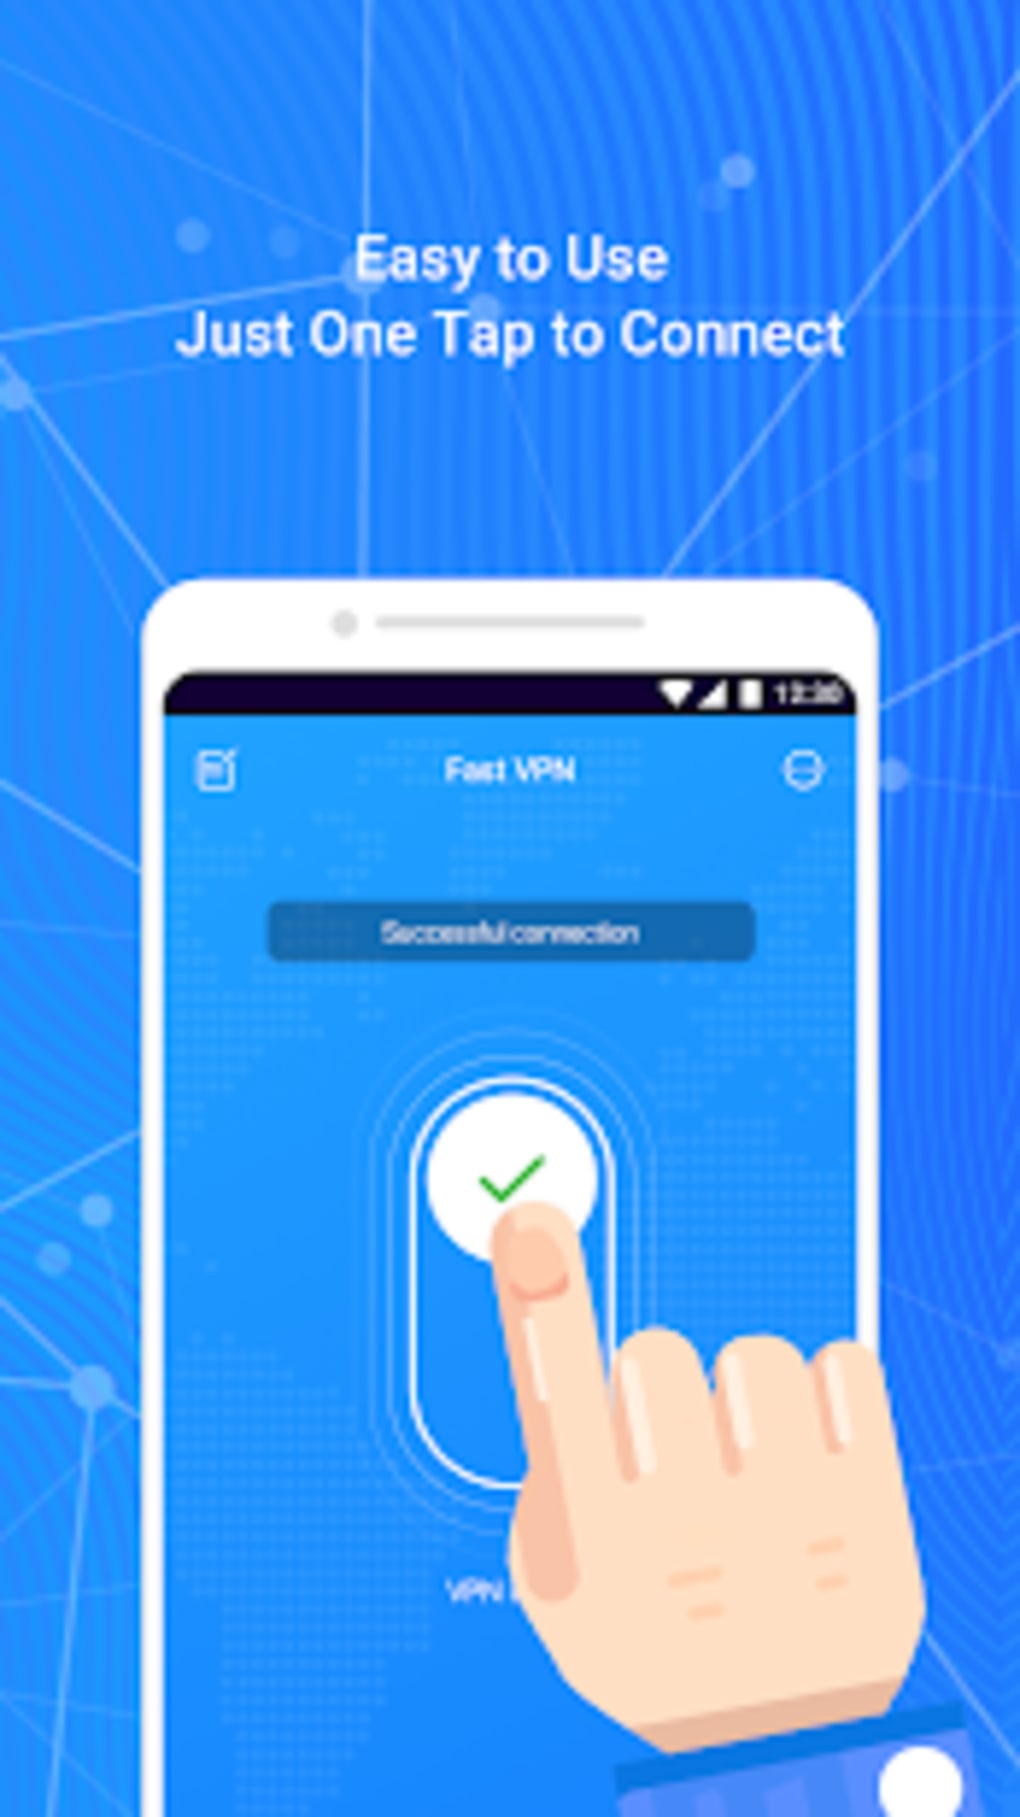 Fast VPN Free VPN Proxy Secure Wi-Fi APK cho Android - Tải về